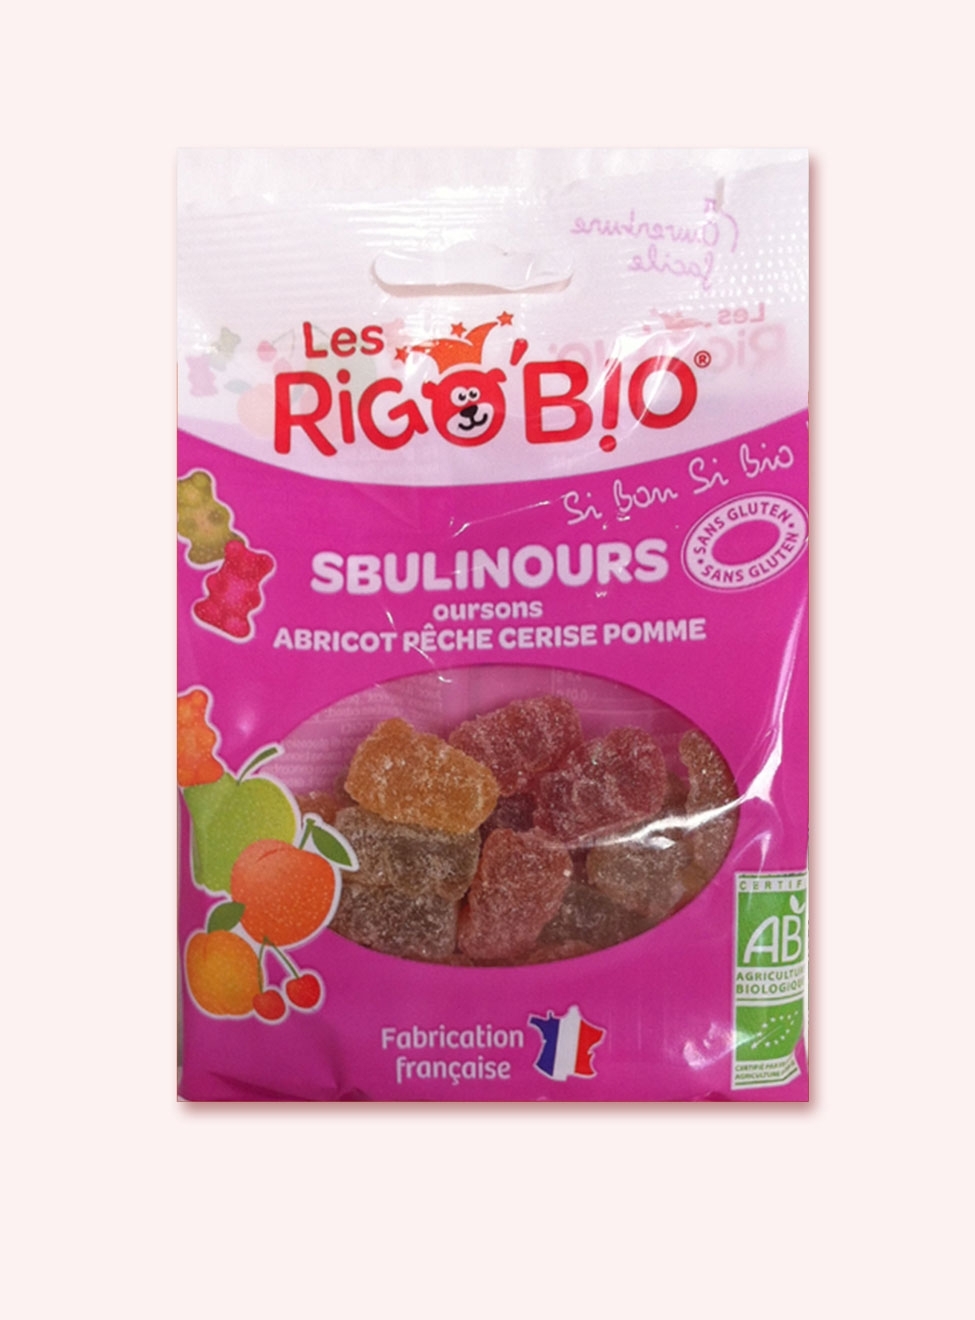 RIGOBIO Sbulinours Fruit- sachet- France origine- art.2882